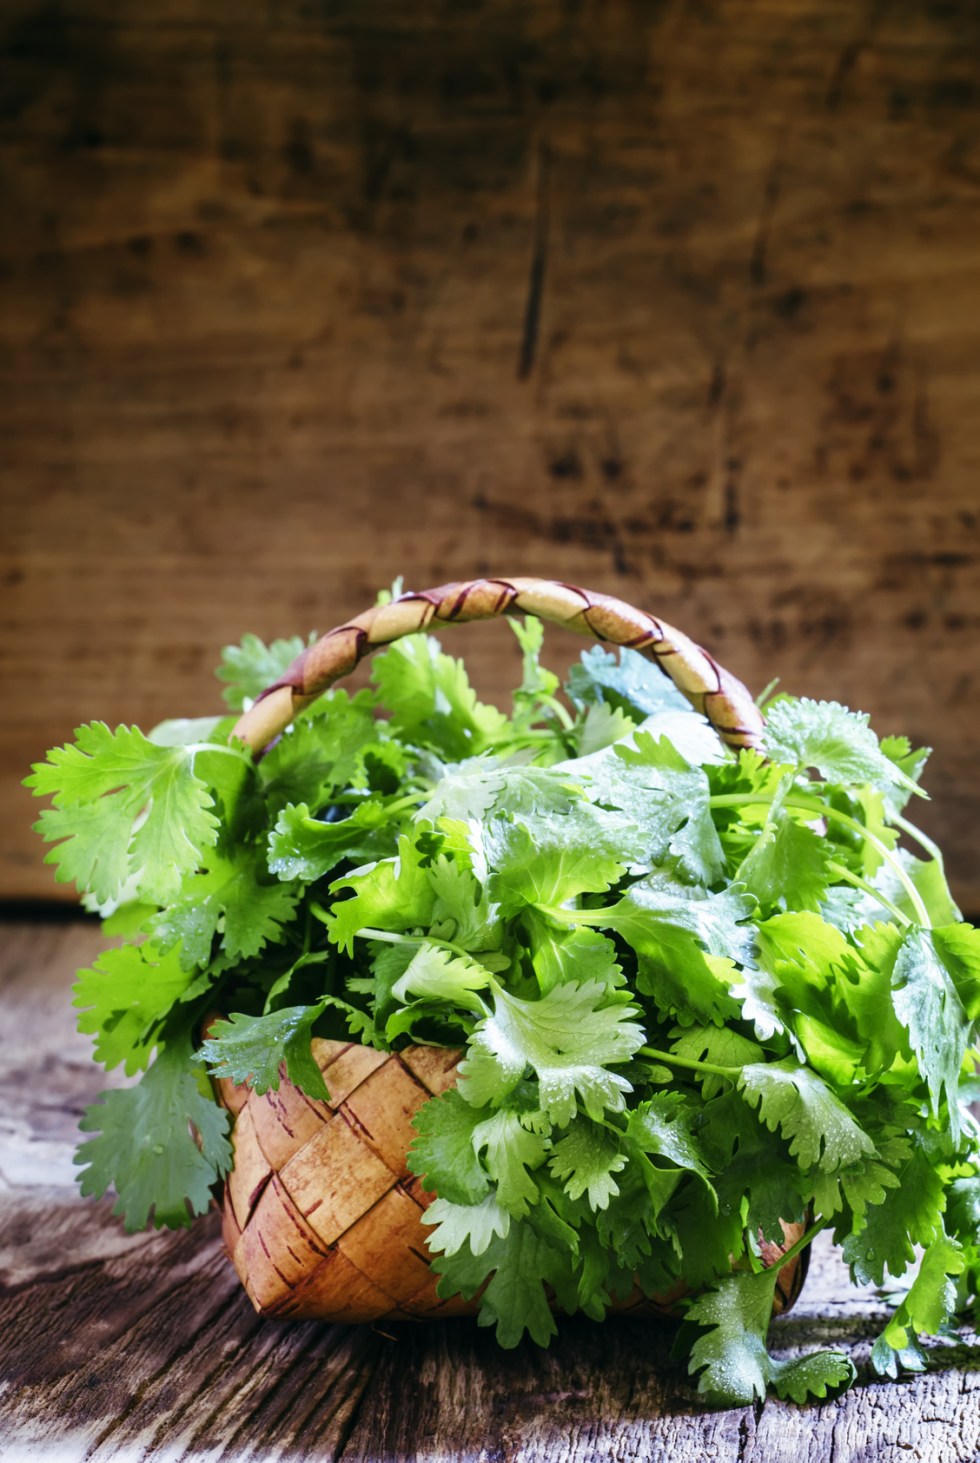 Fresh cilantro in a wicker basket, vintage wooden background, se